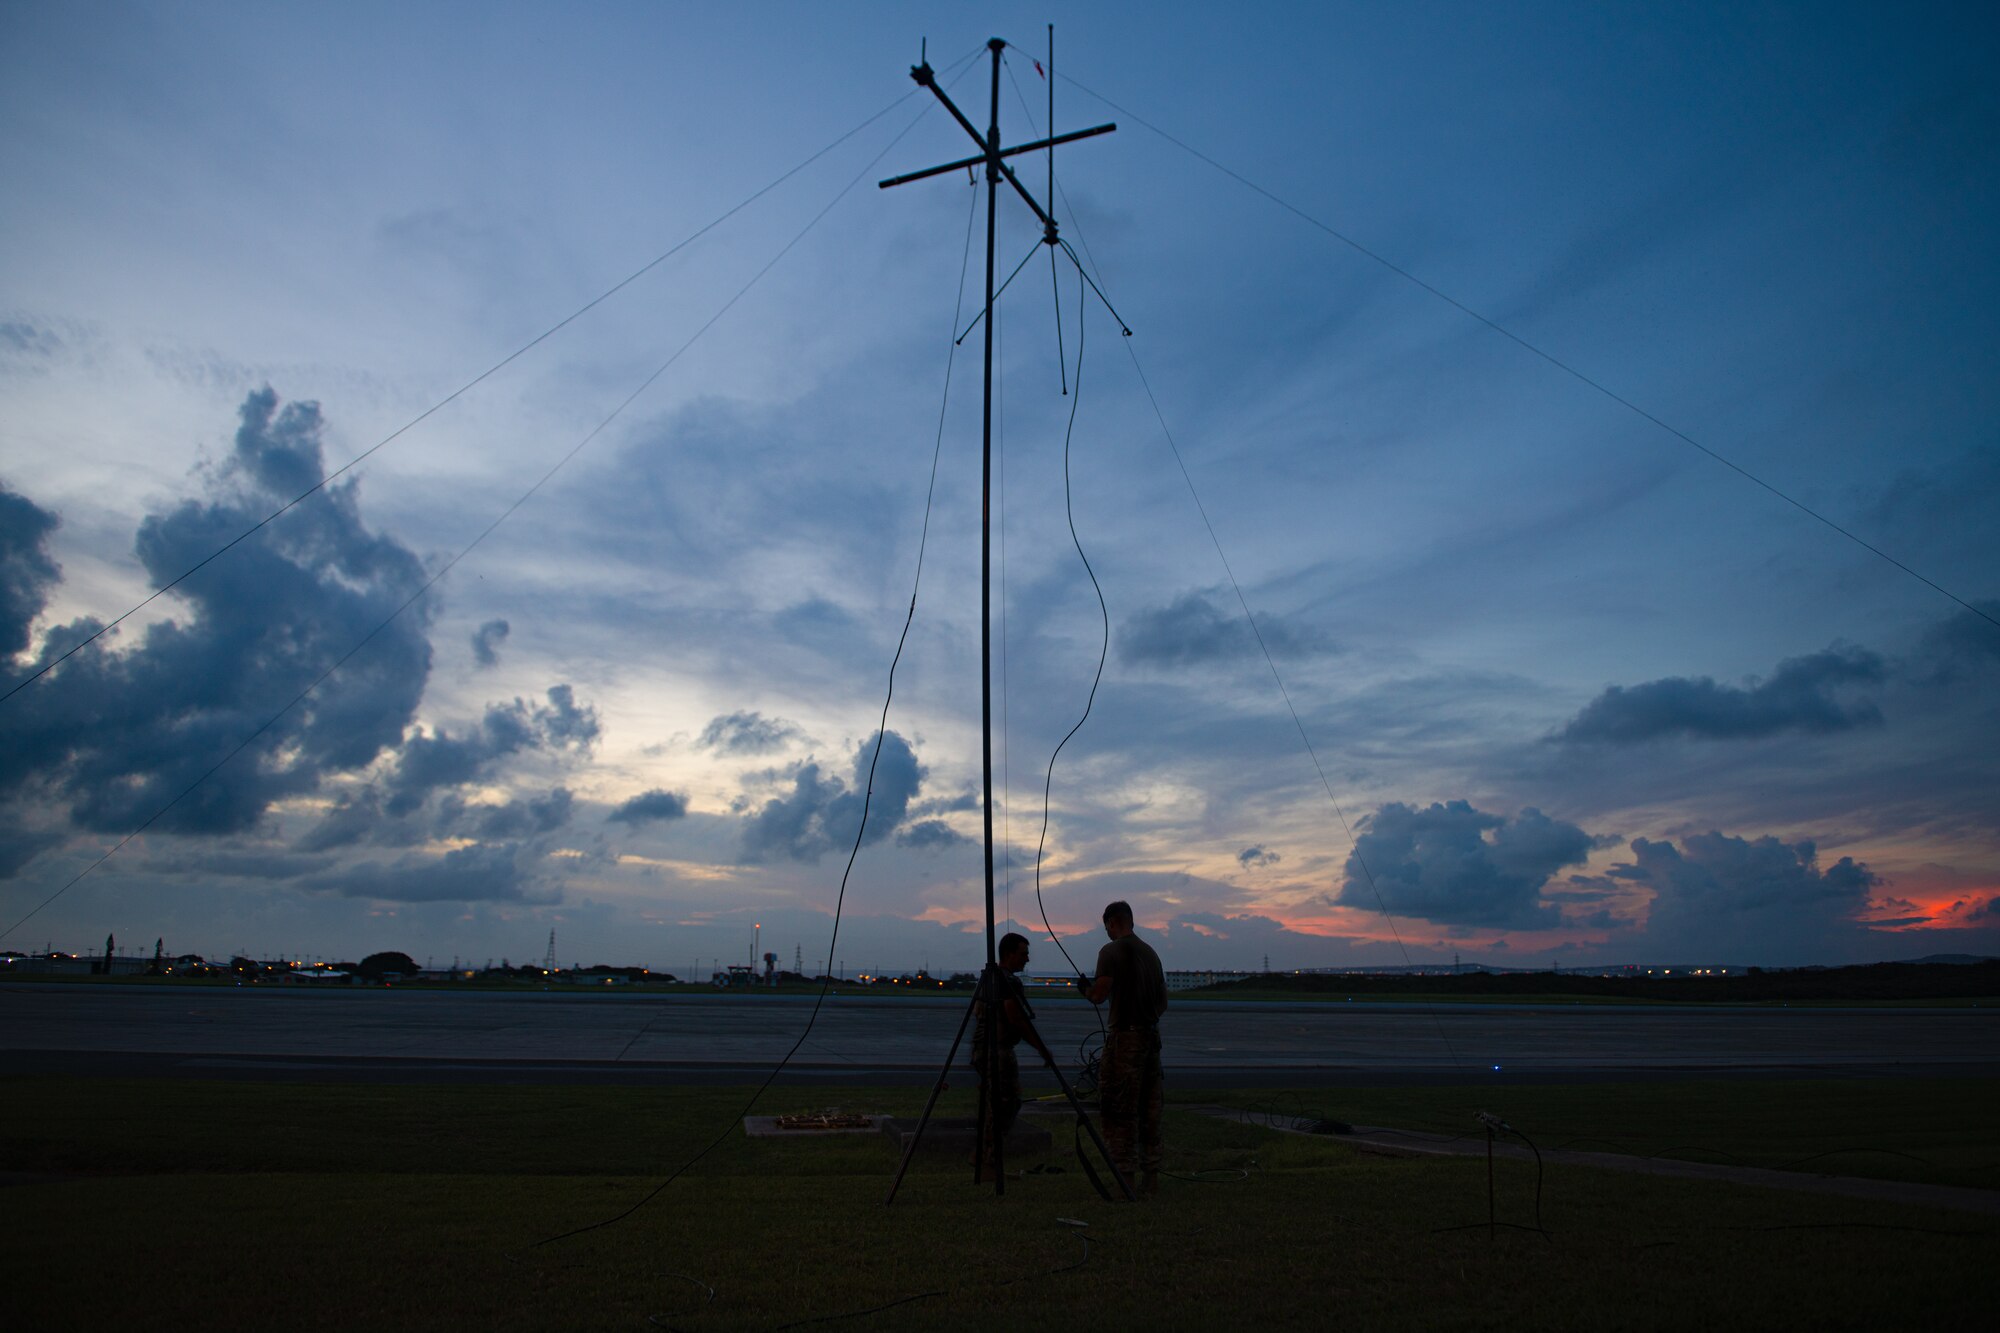 Airmen set up a radio antenna.